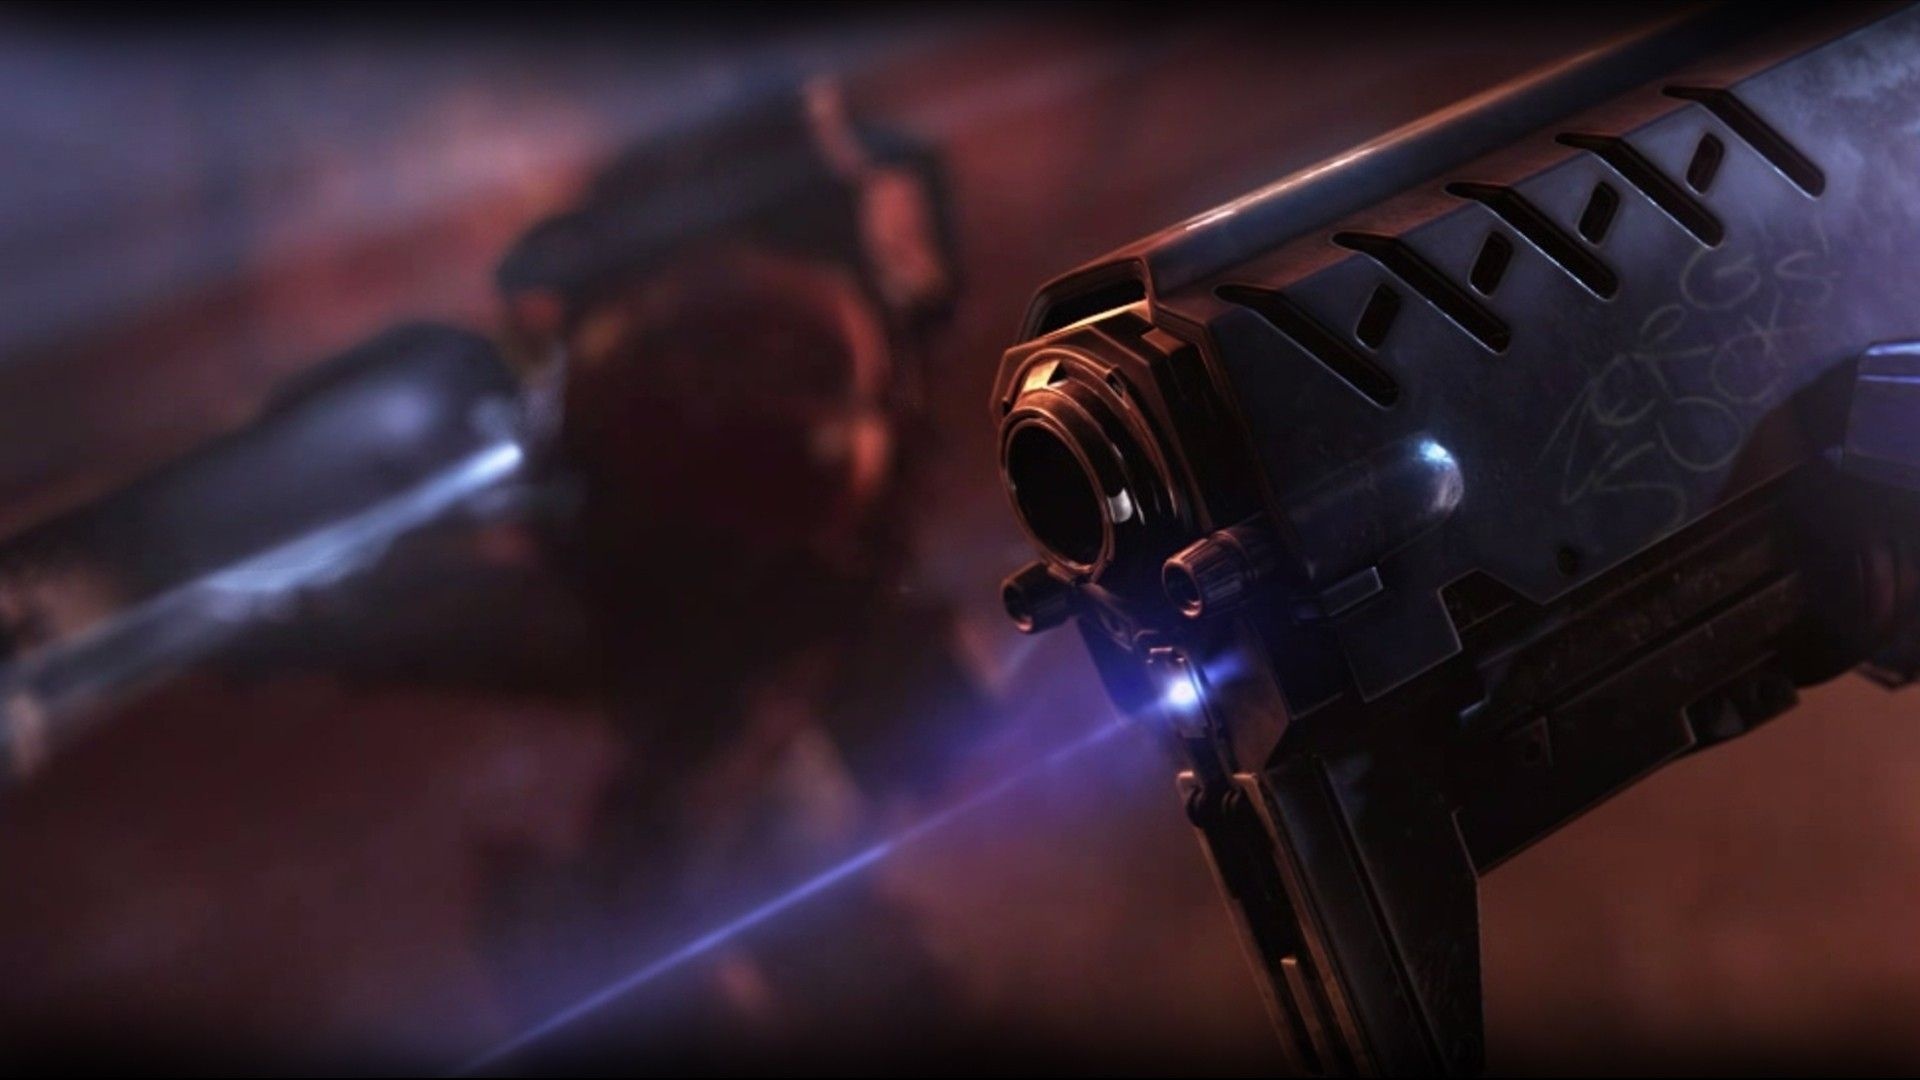 Laser Tag: Starcraft II light gun, A popular online video game, Recreational shooting activity. 1920x1080 Full HD Wallpaper.